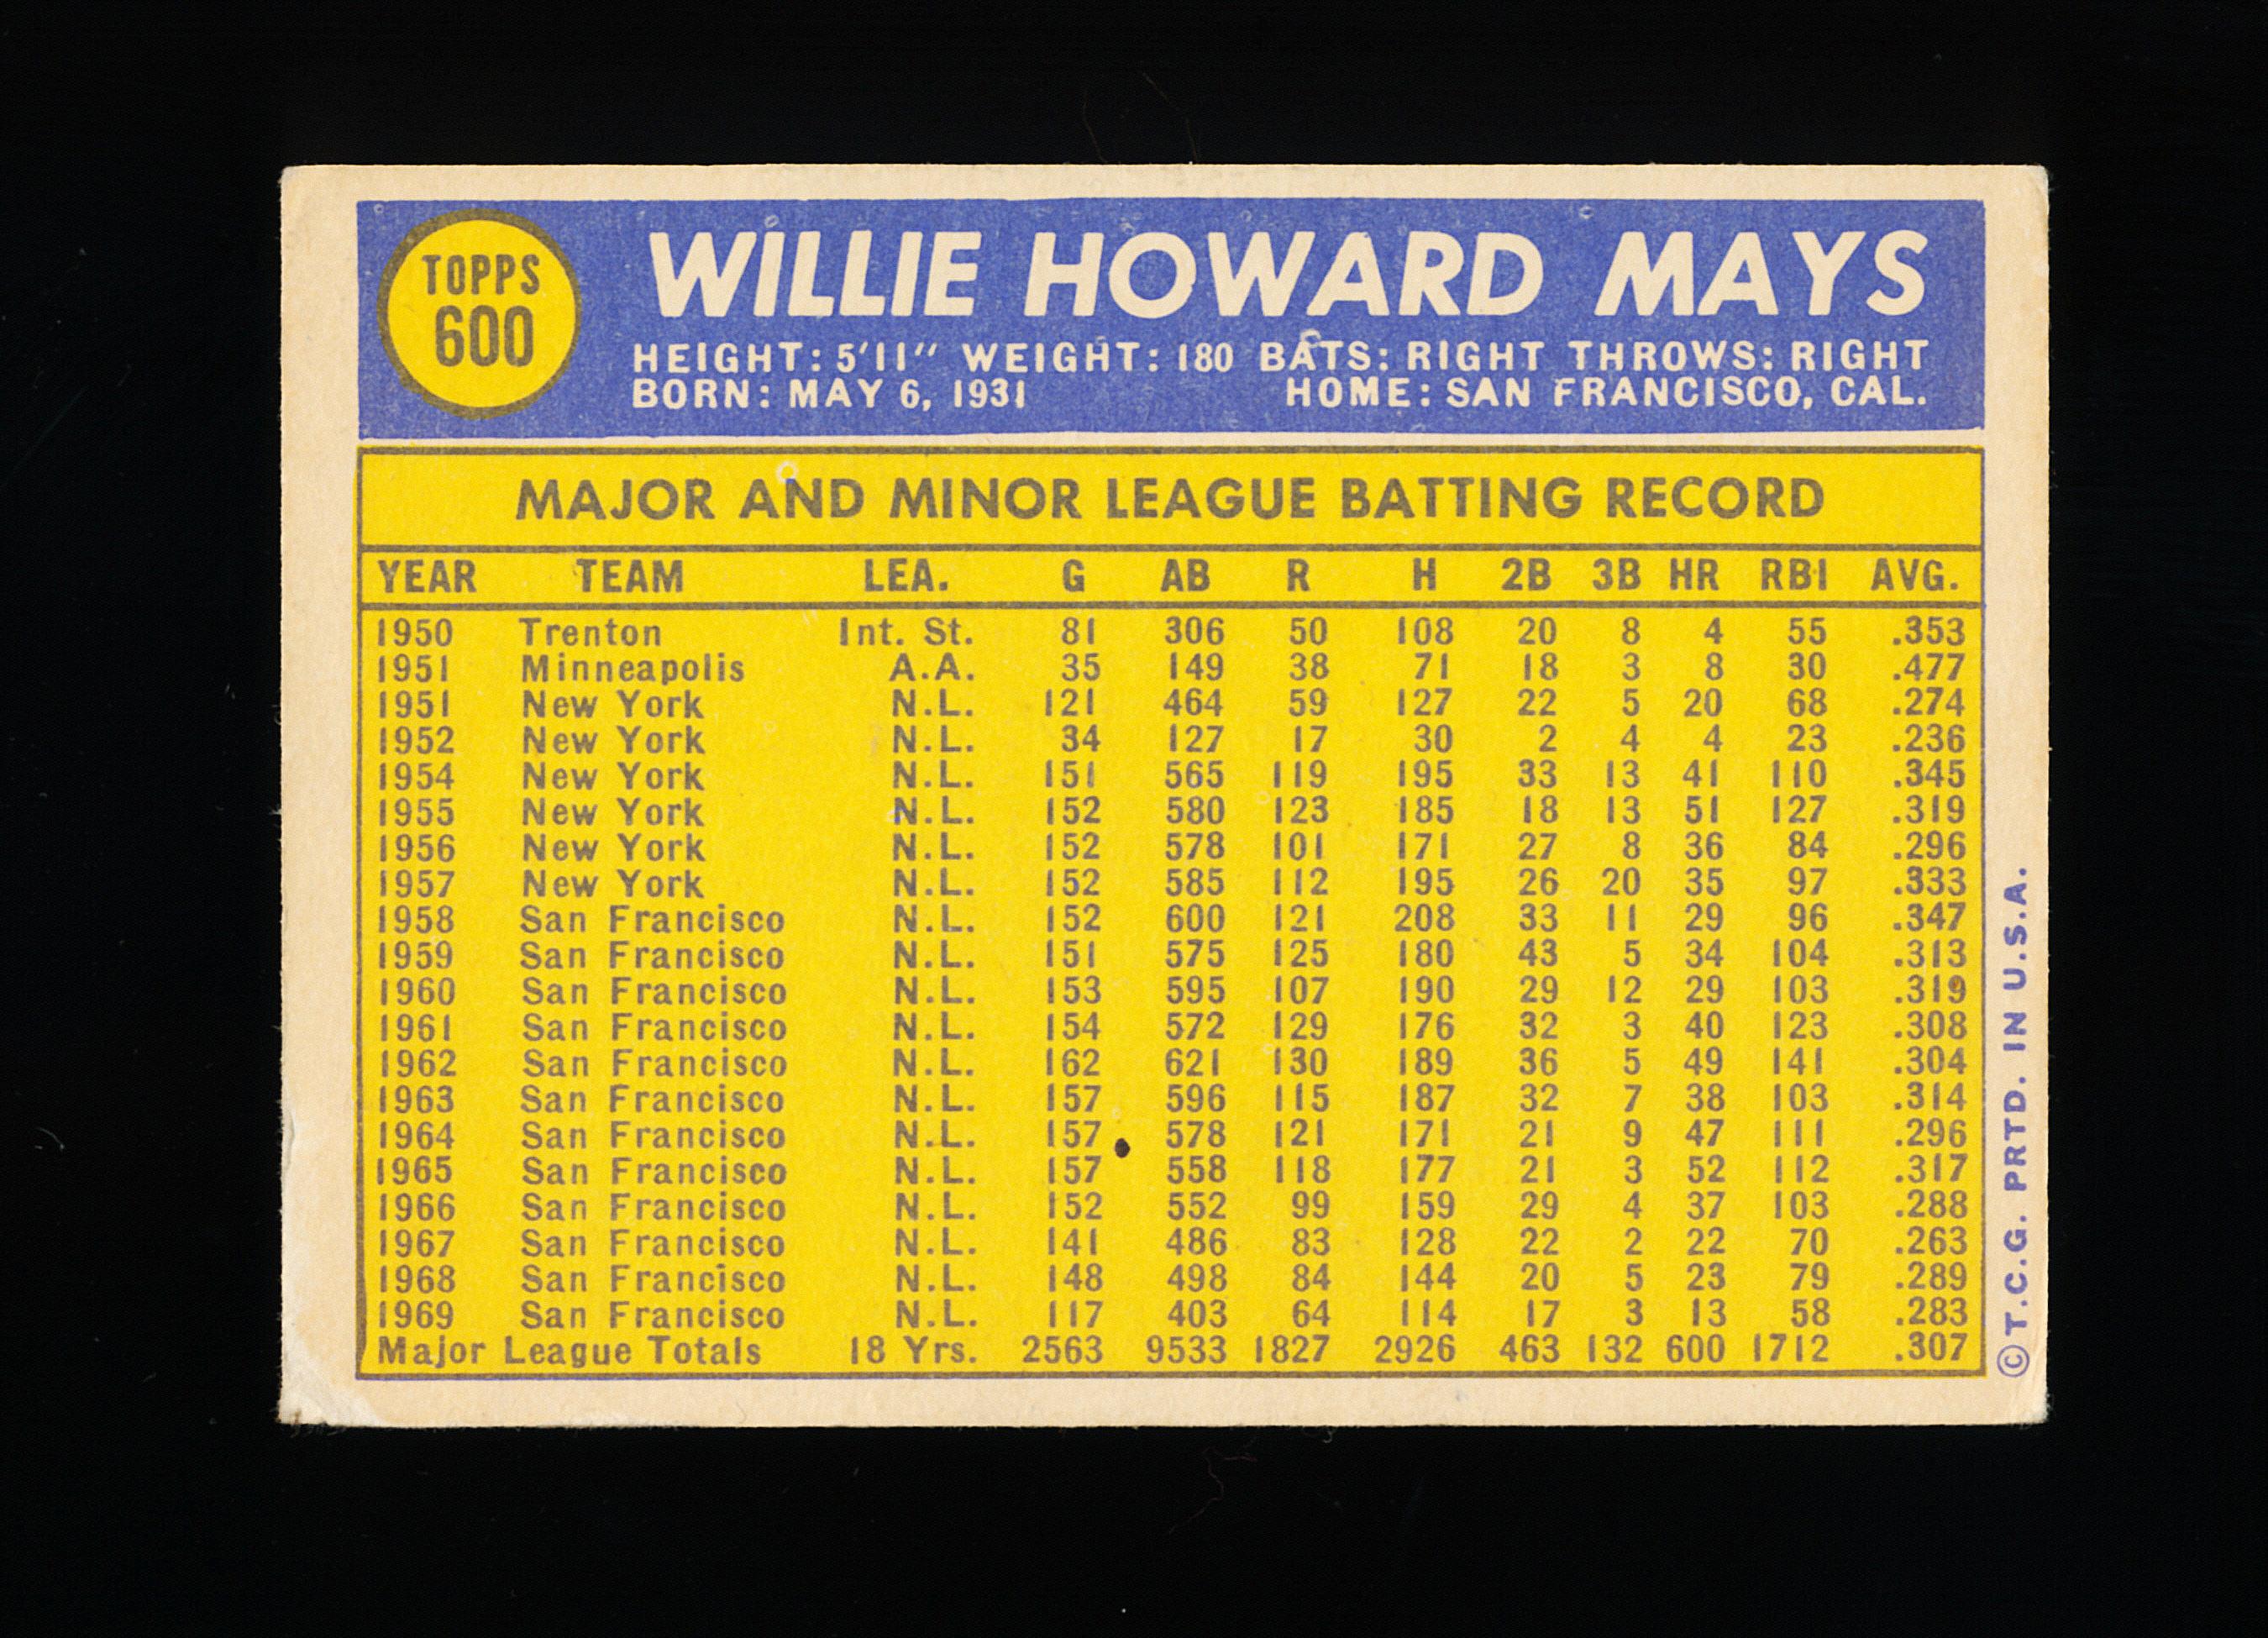 1970 Topps Baseball Card #600 Hall of Famer Willie Mays San Francisco Giant